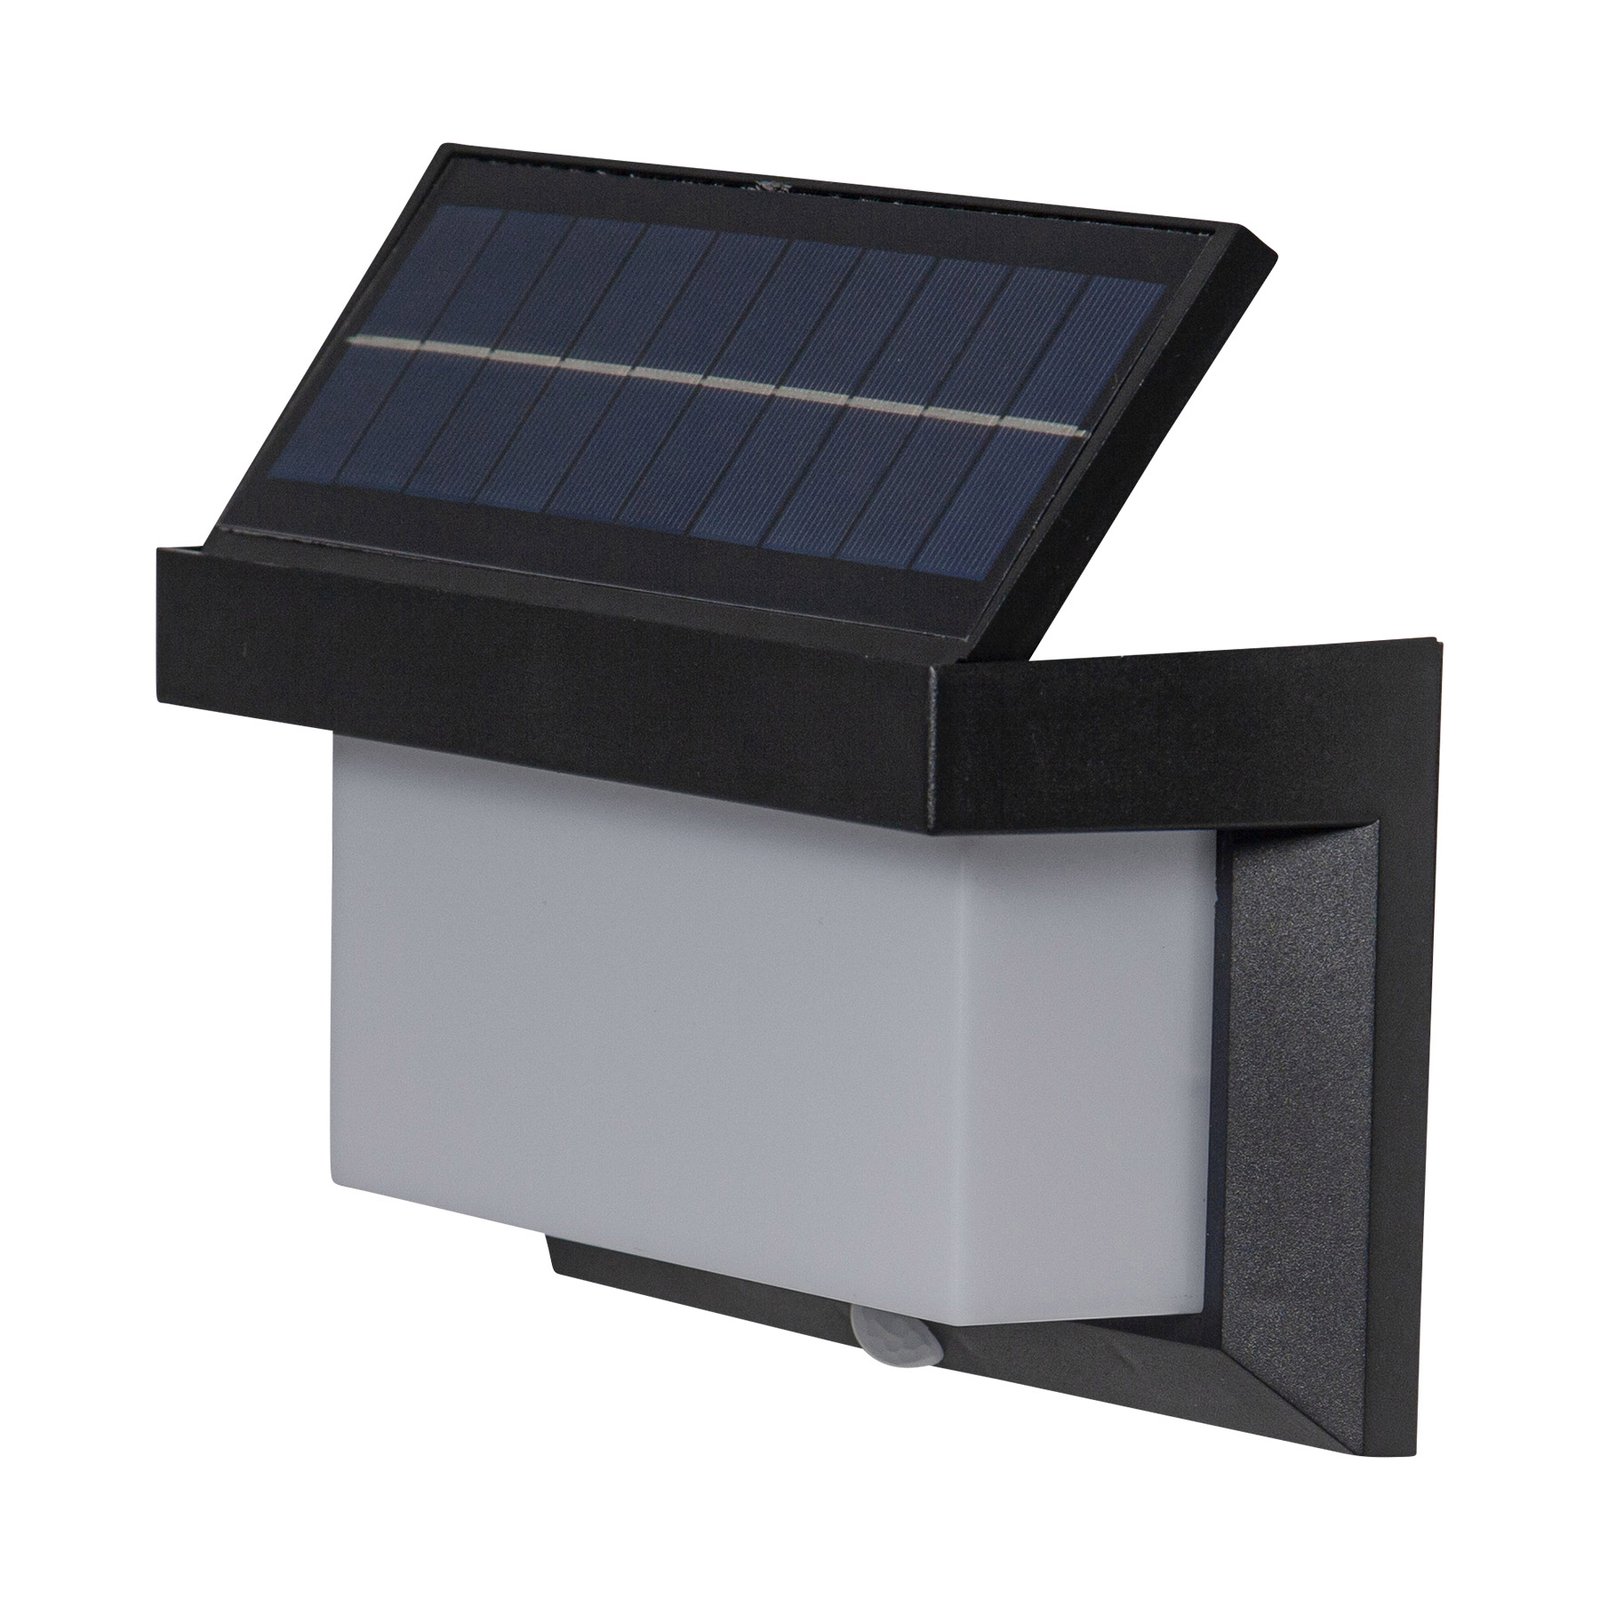 Valla LED solar wall light with motion sensor